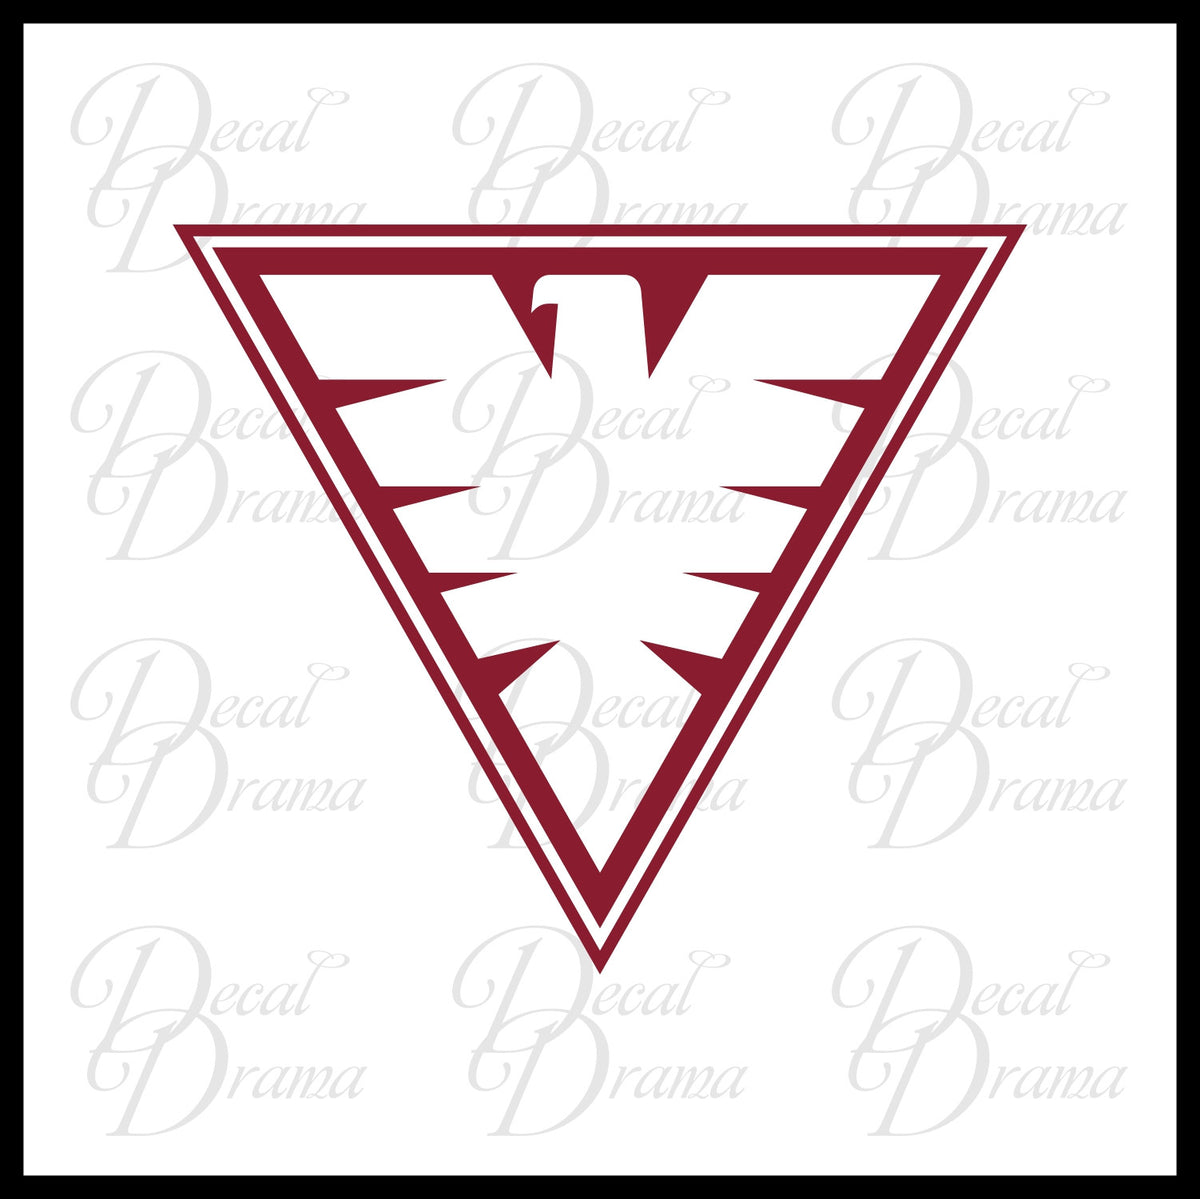 phoenix marvel logo